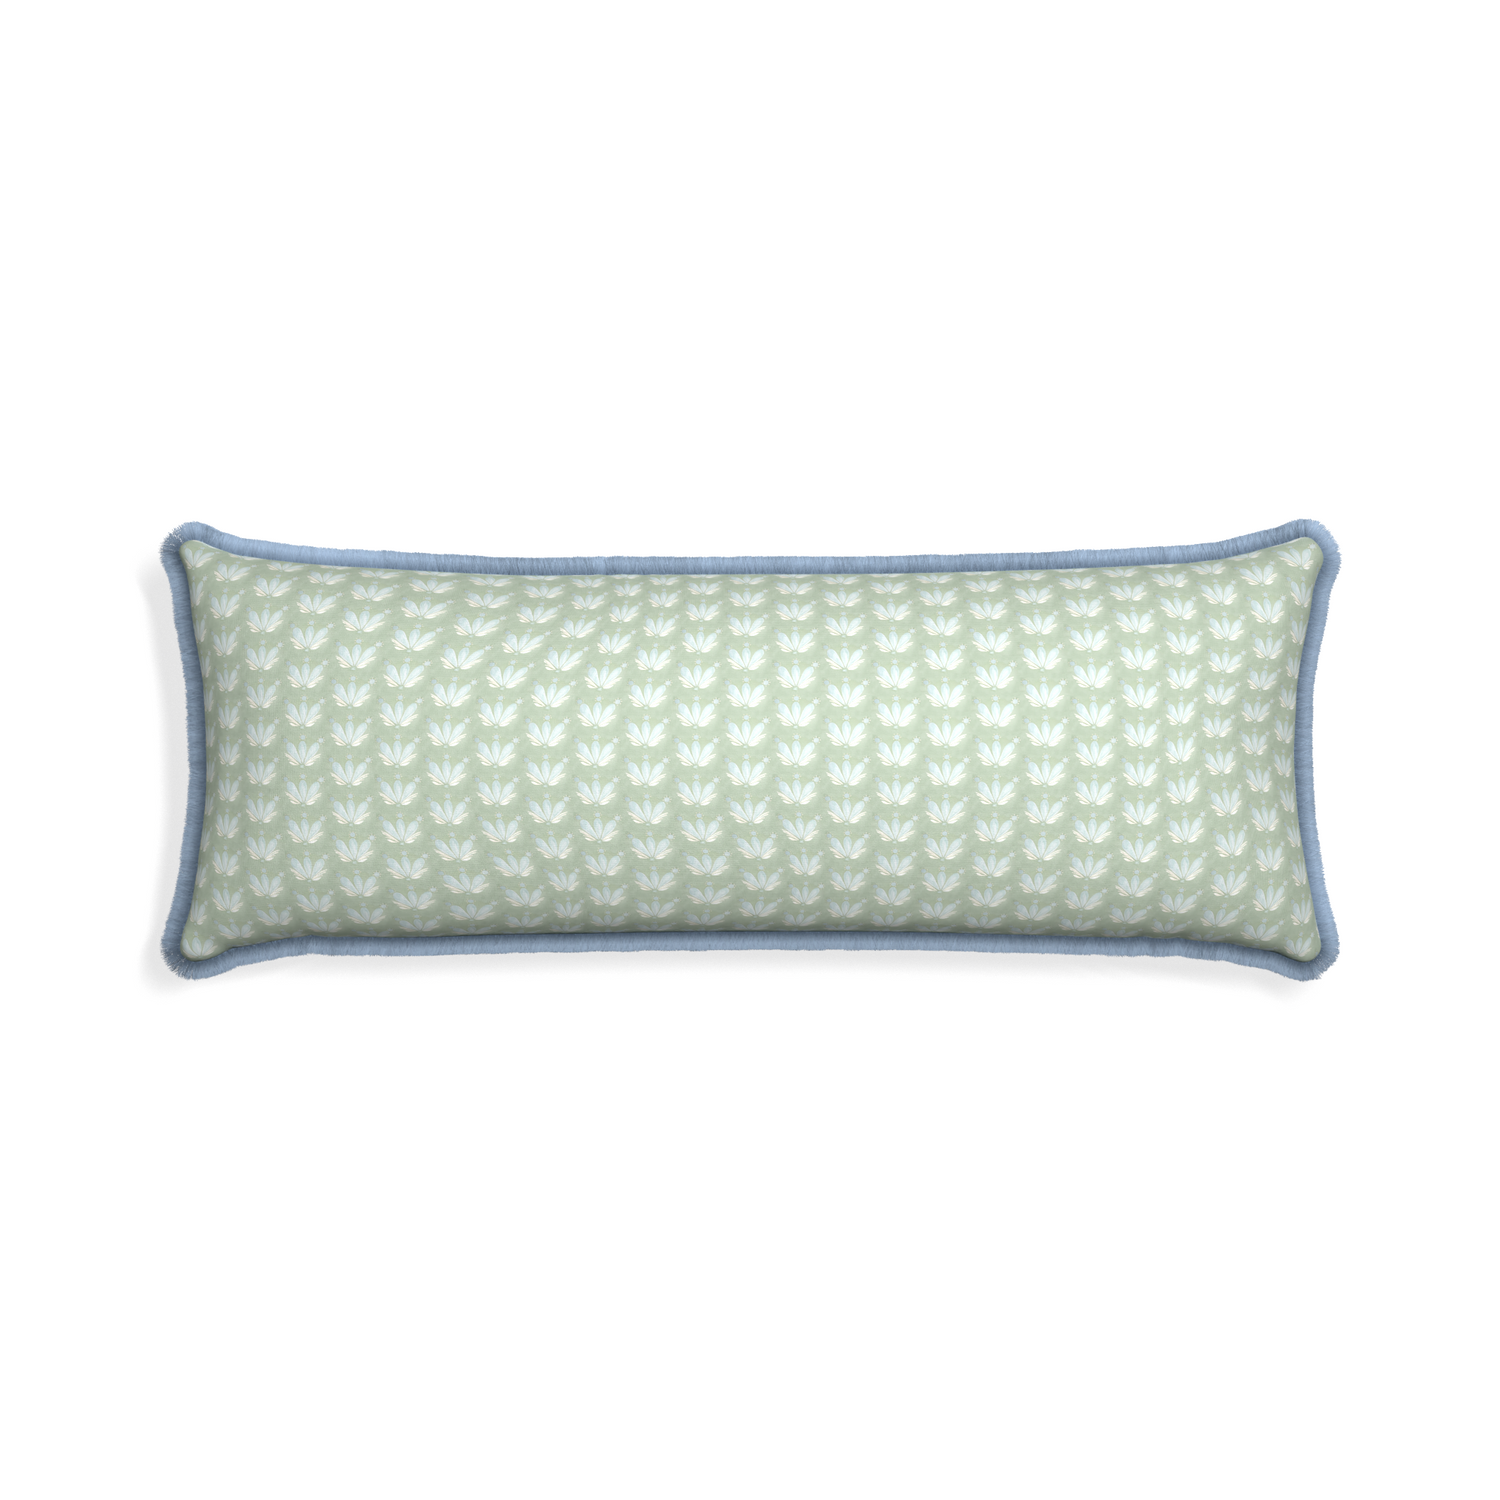 Xl-lumbar serena sea salt custom pillow with sky fringe on white background